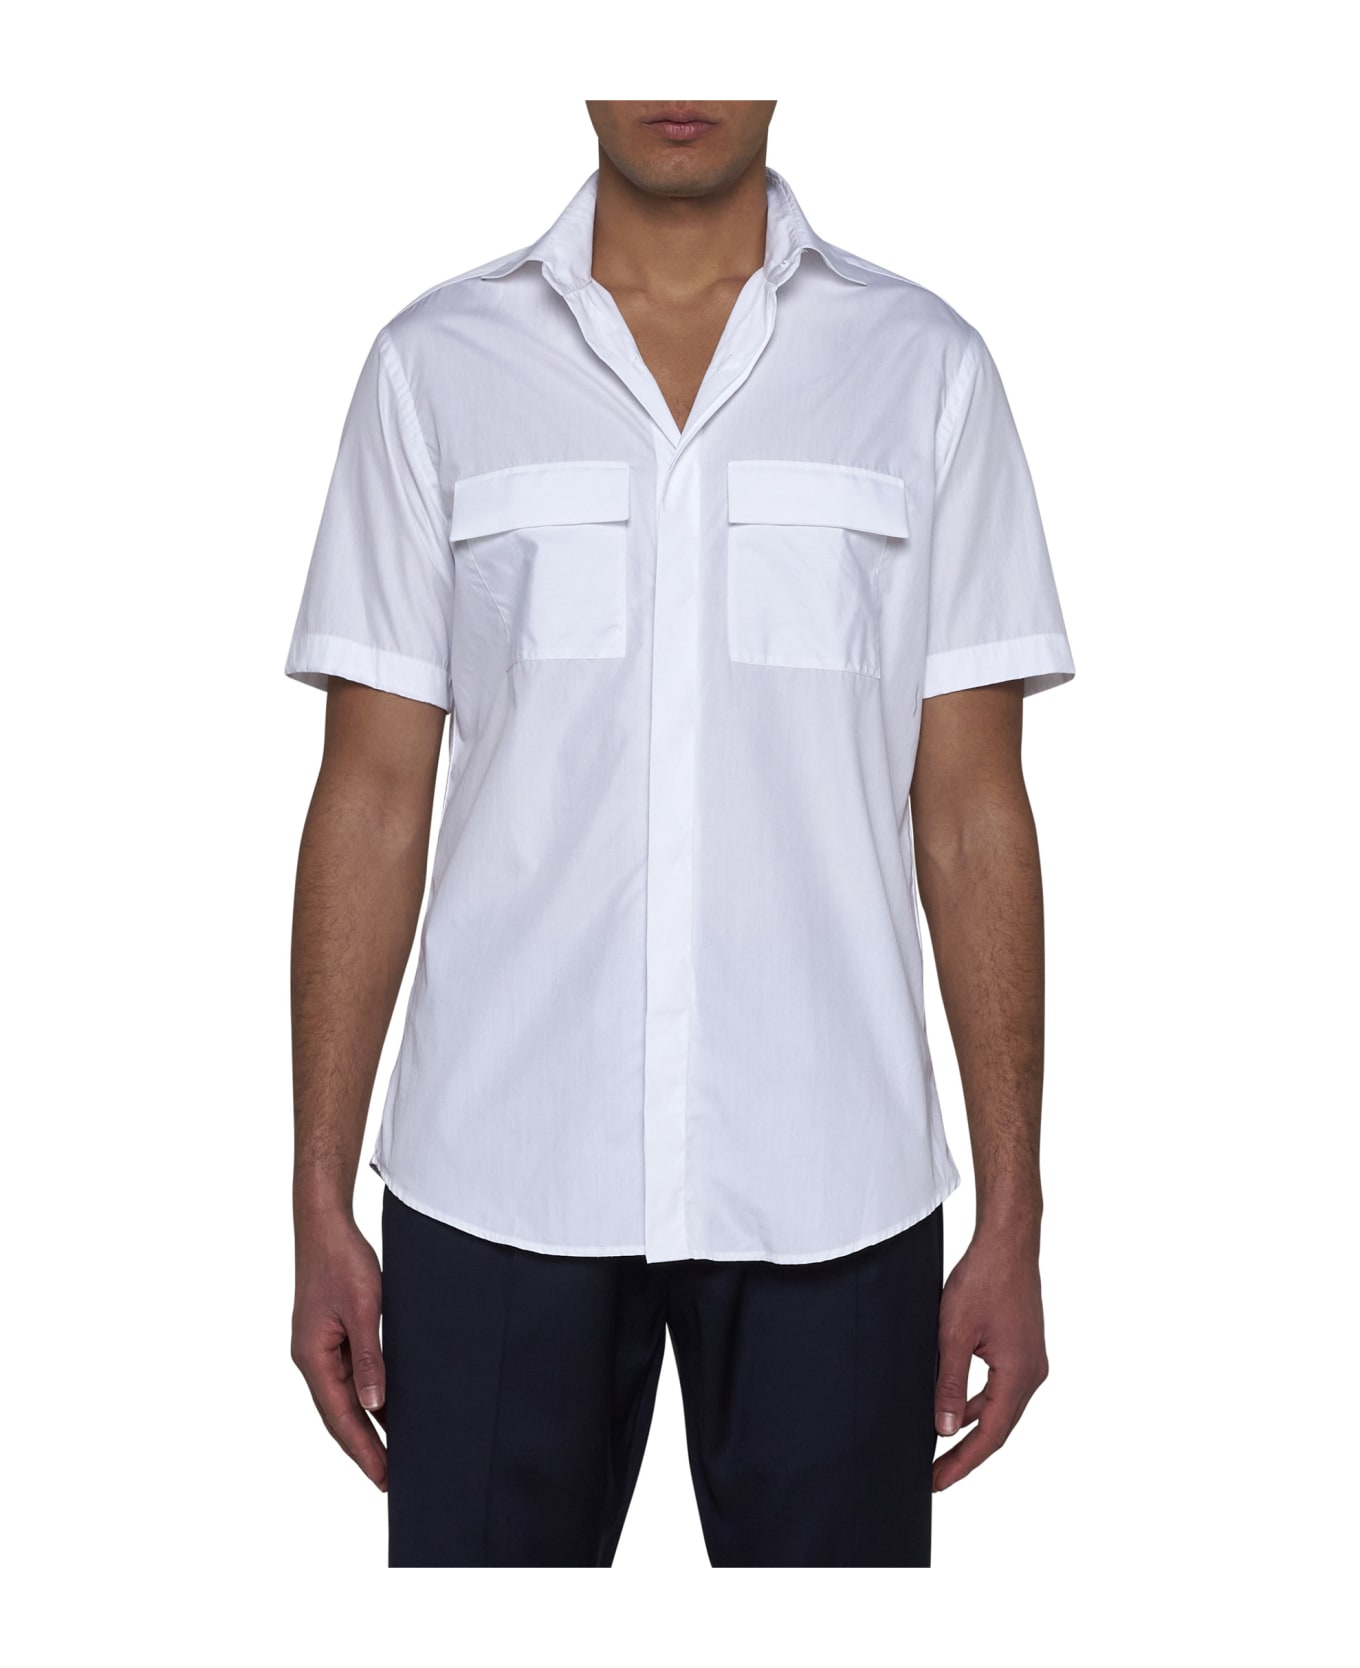 Low Brand Shirt - White シャツ